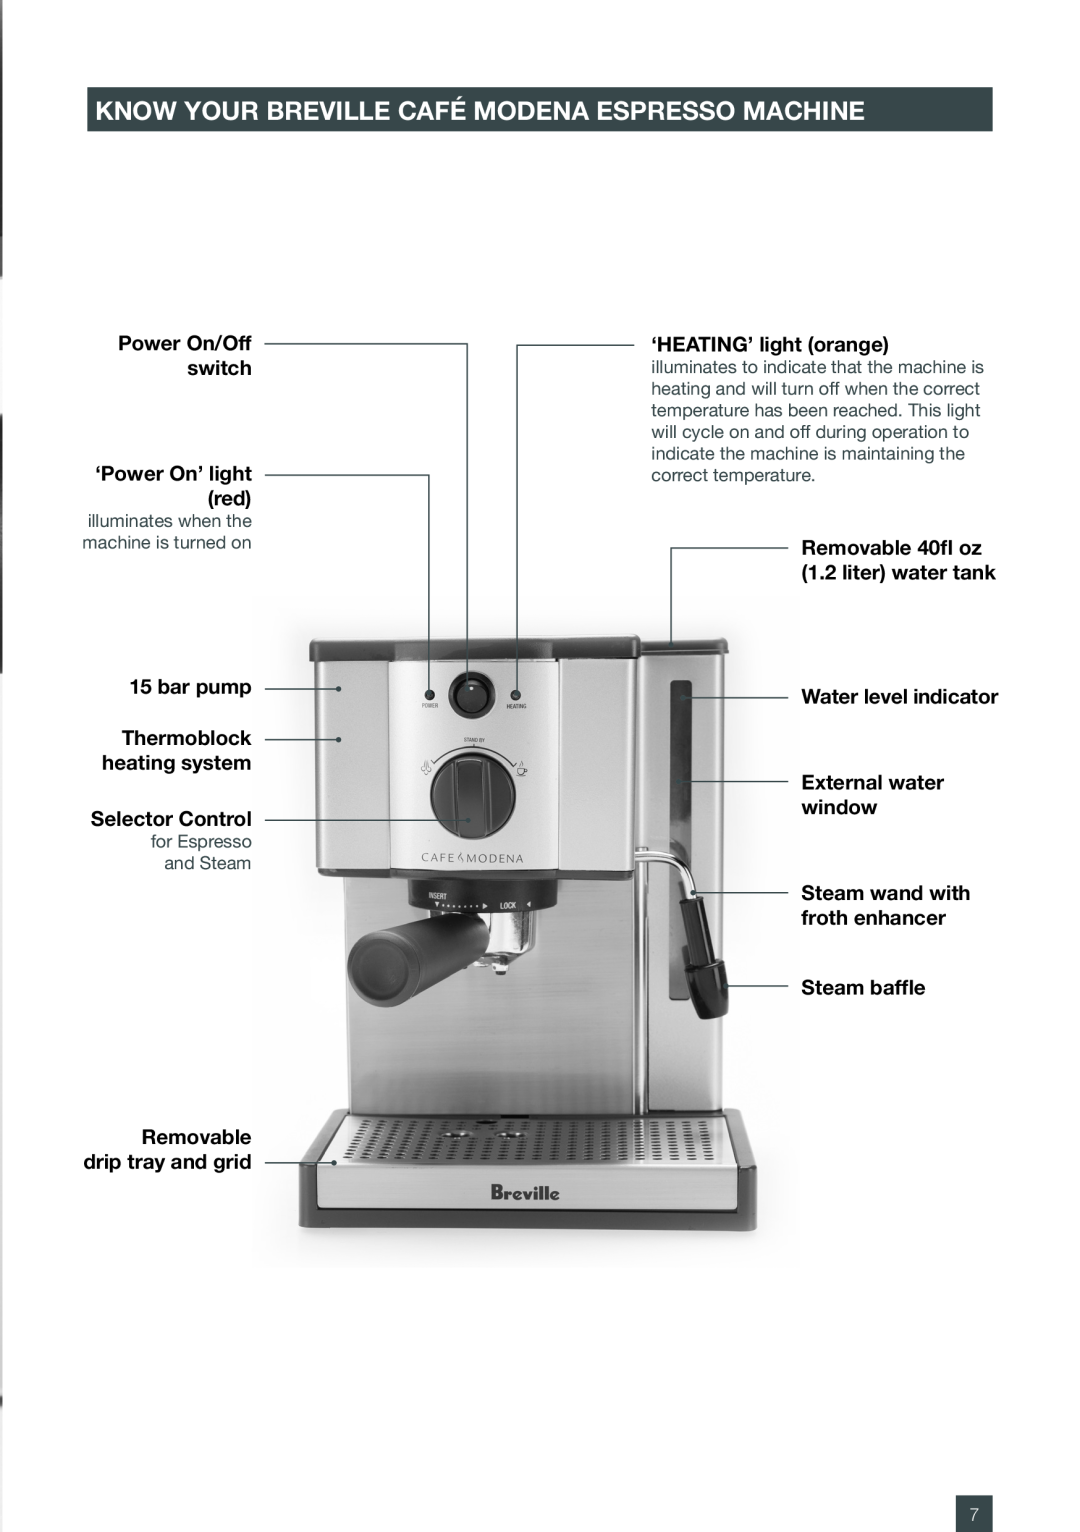 Breville ES6SXL /A manual Know Your Breville Café Modena Espresso Machine, Power On/Off switch, bar pump, Selector Control 